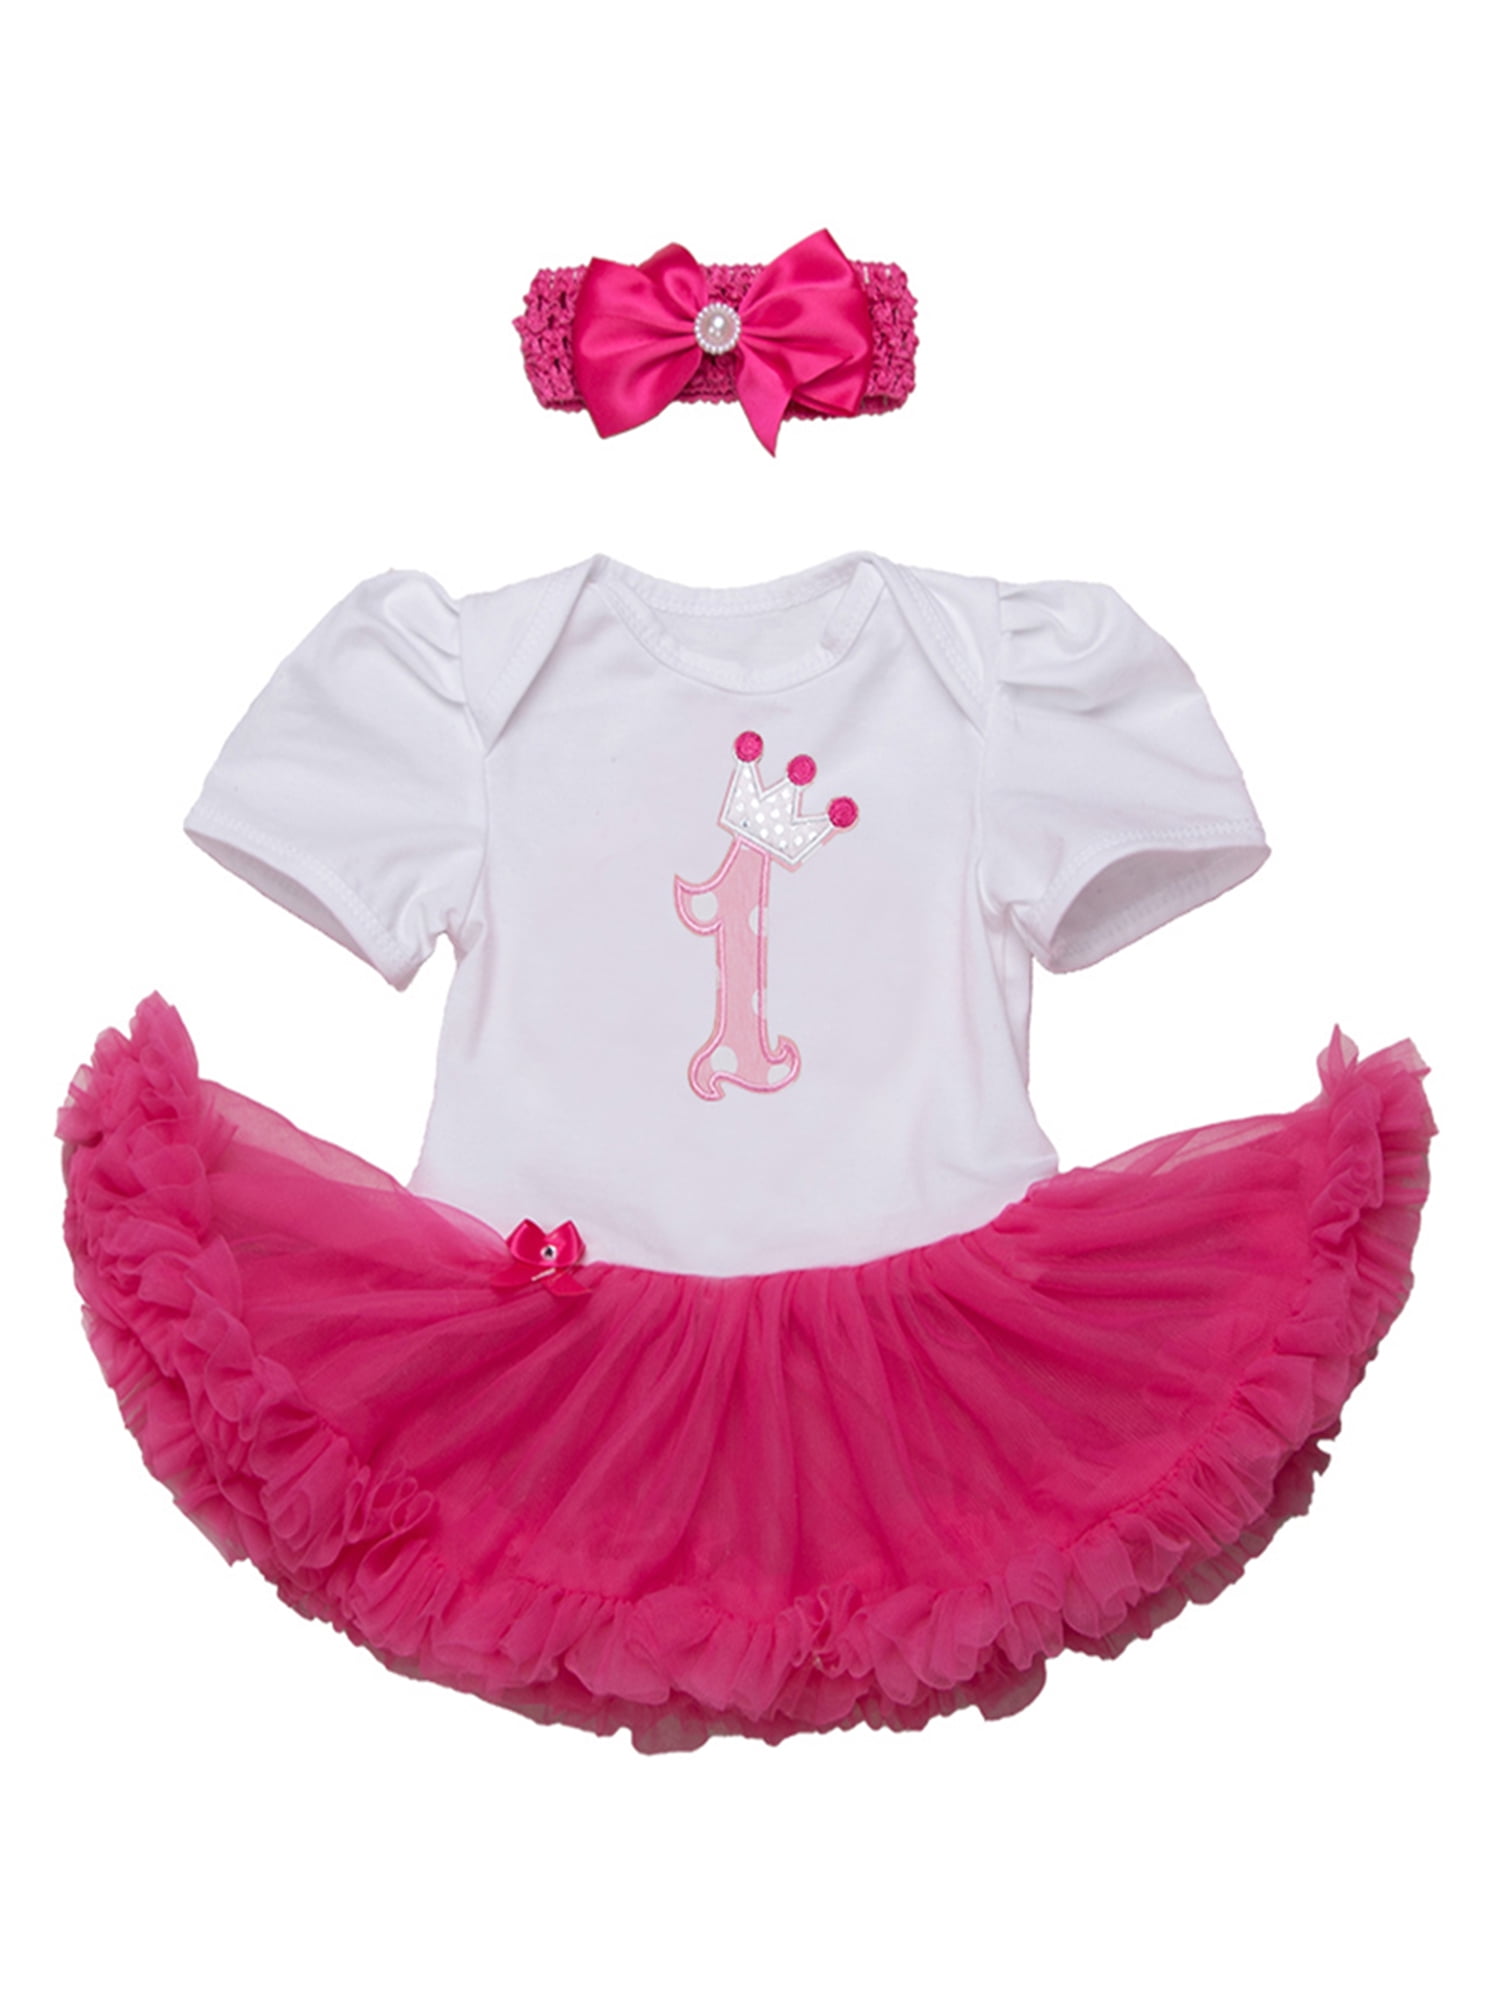 Baby Girls 1st Birthday Mermaid Outfit Ruffle Sleeve Romper Tutu Dress Sequin Bowknot Princess Skirt Sets